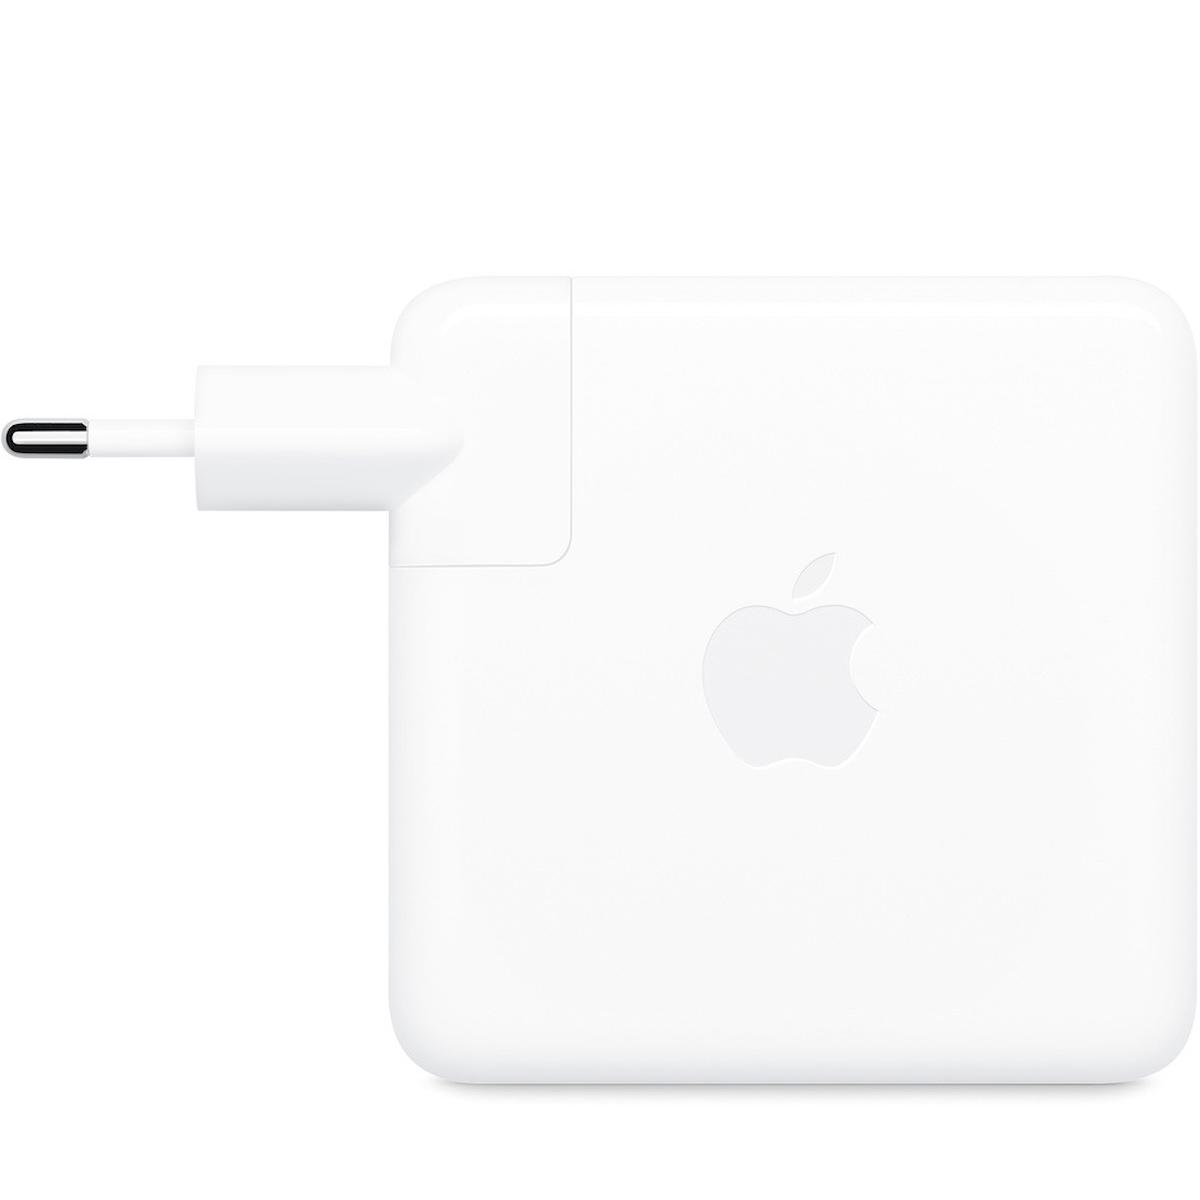 Apple Mx0j2tu/a iPhone USB Kablolu 5 W 1 Amper Şarj Aleti Beyaz